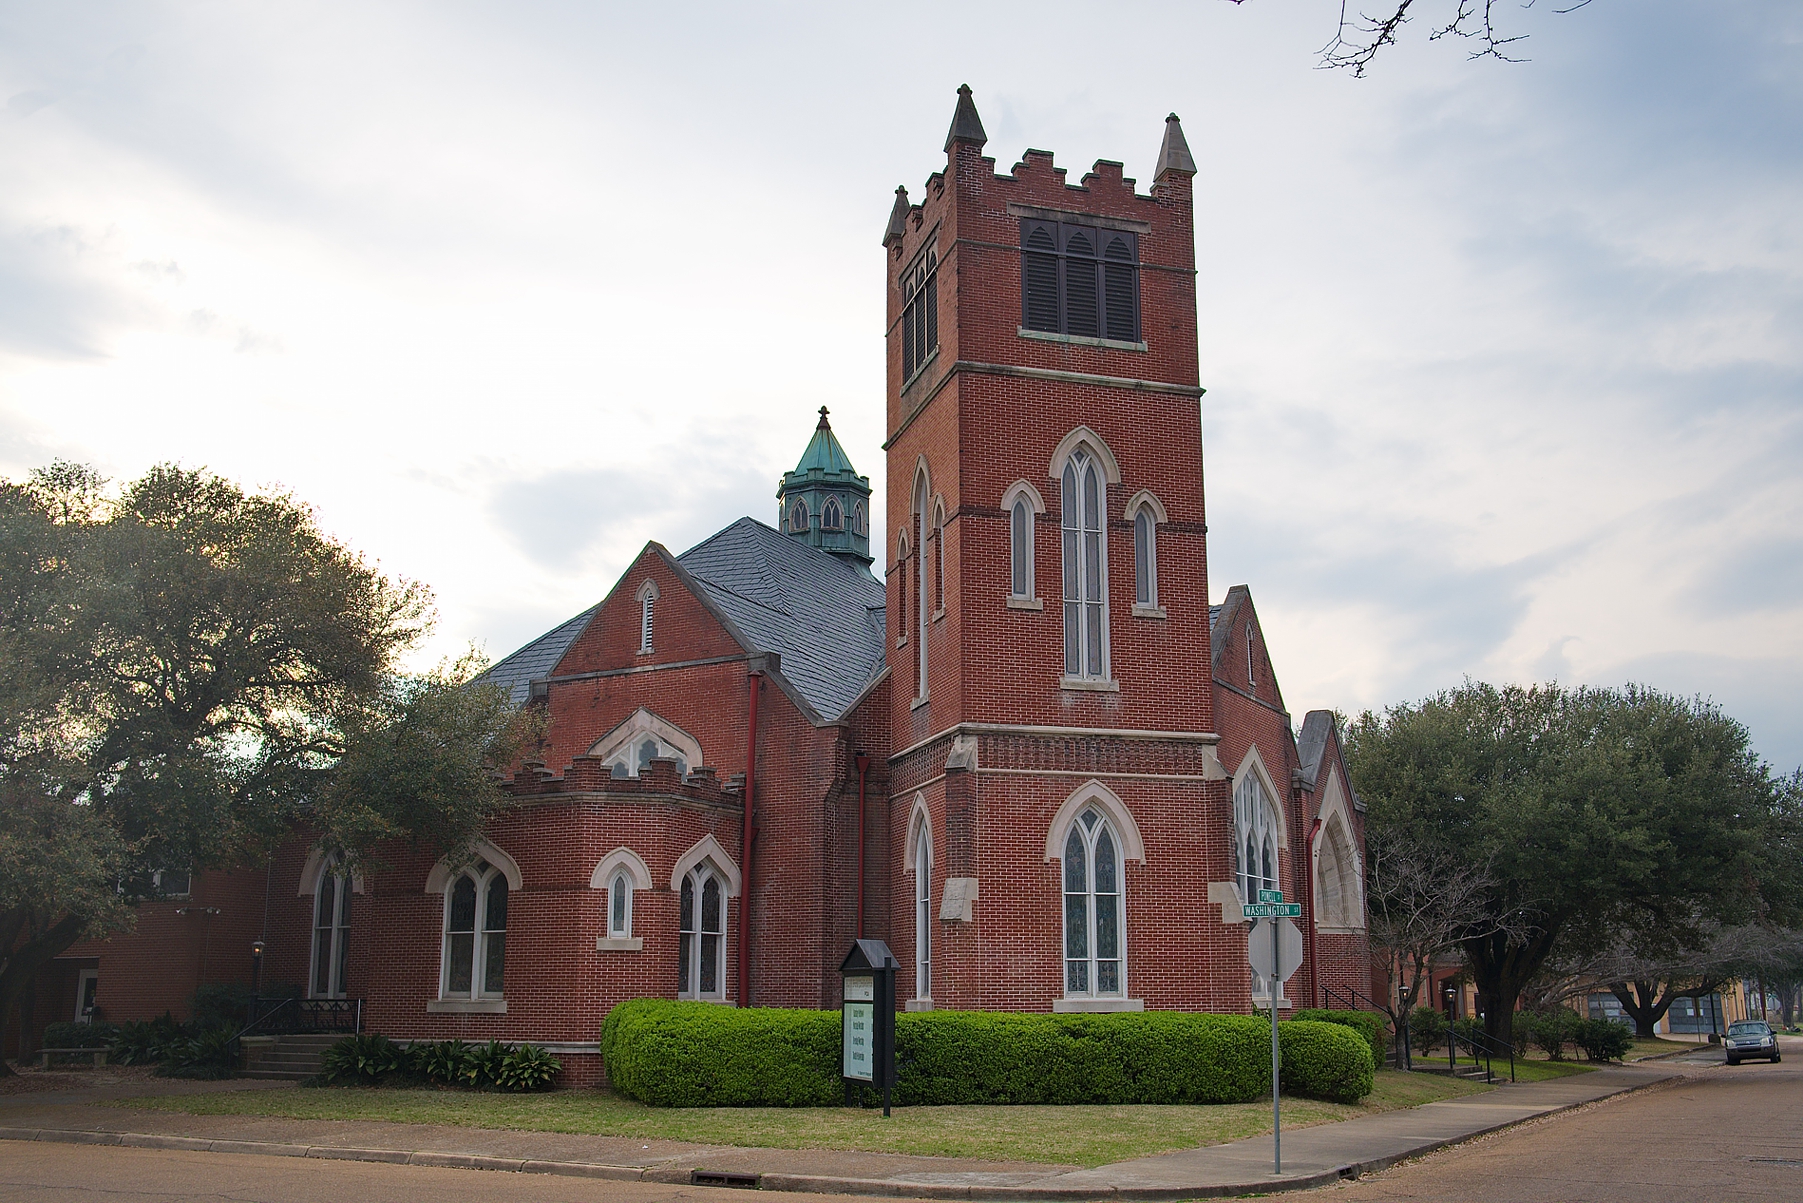  First Presbyterian church in Yazoo City 